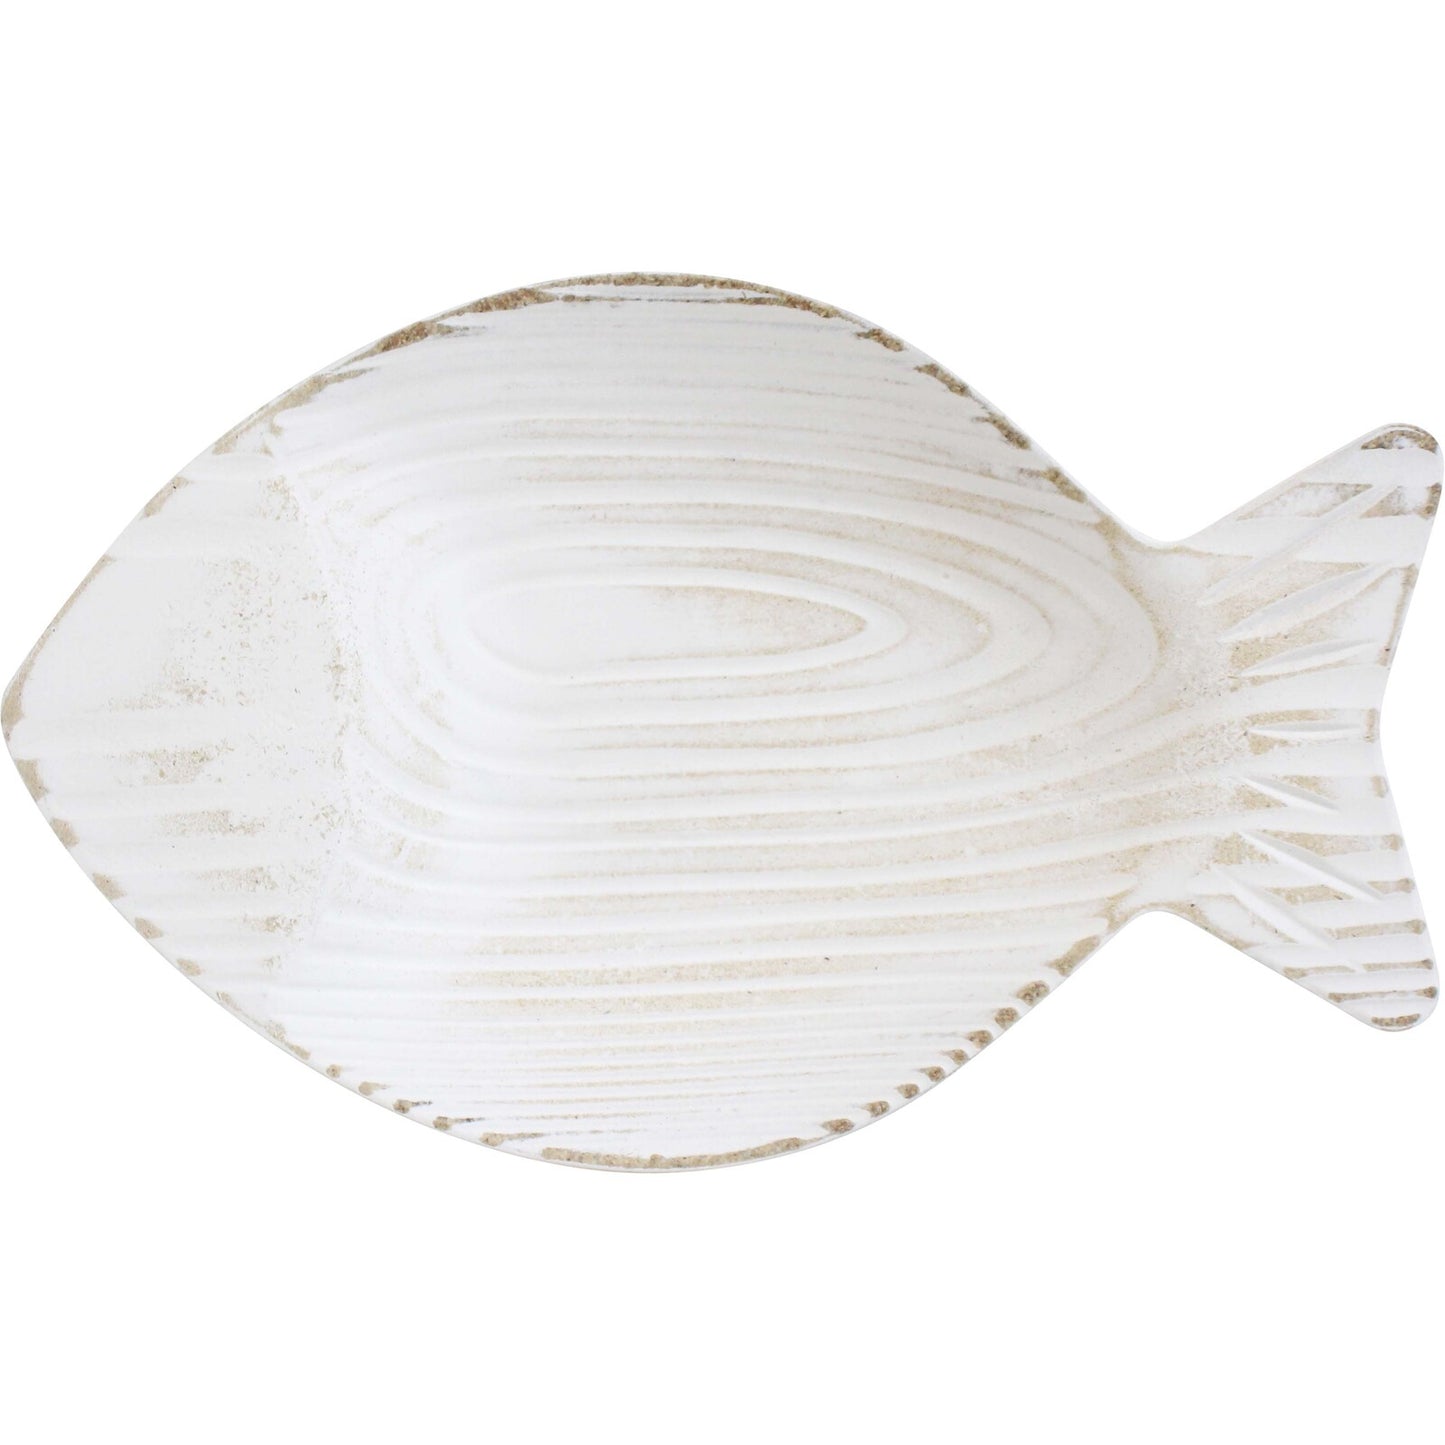 Fish Bowl Lrg Rustic White